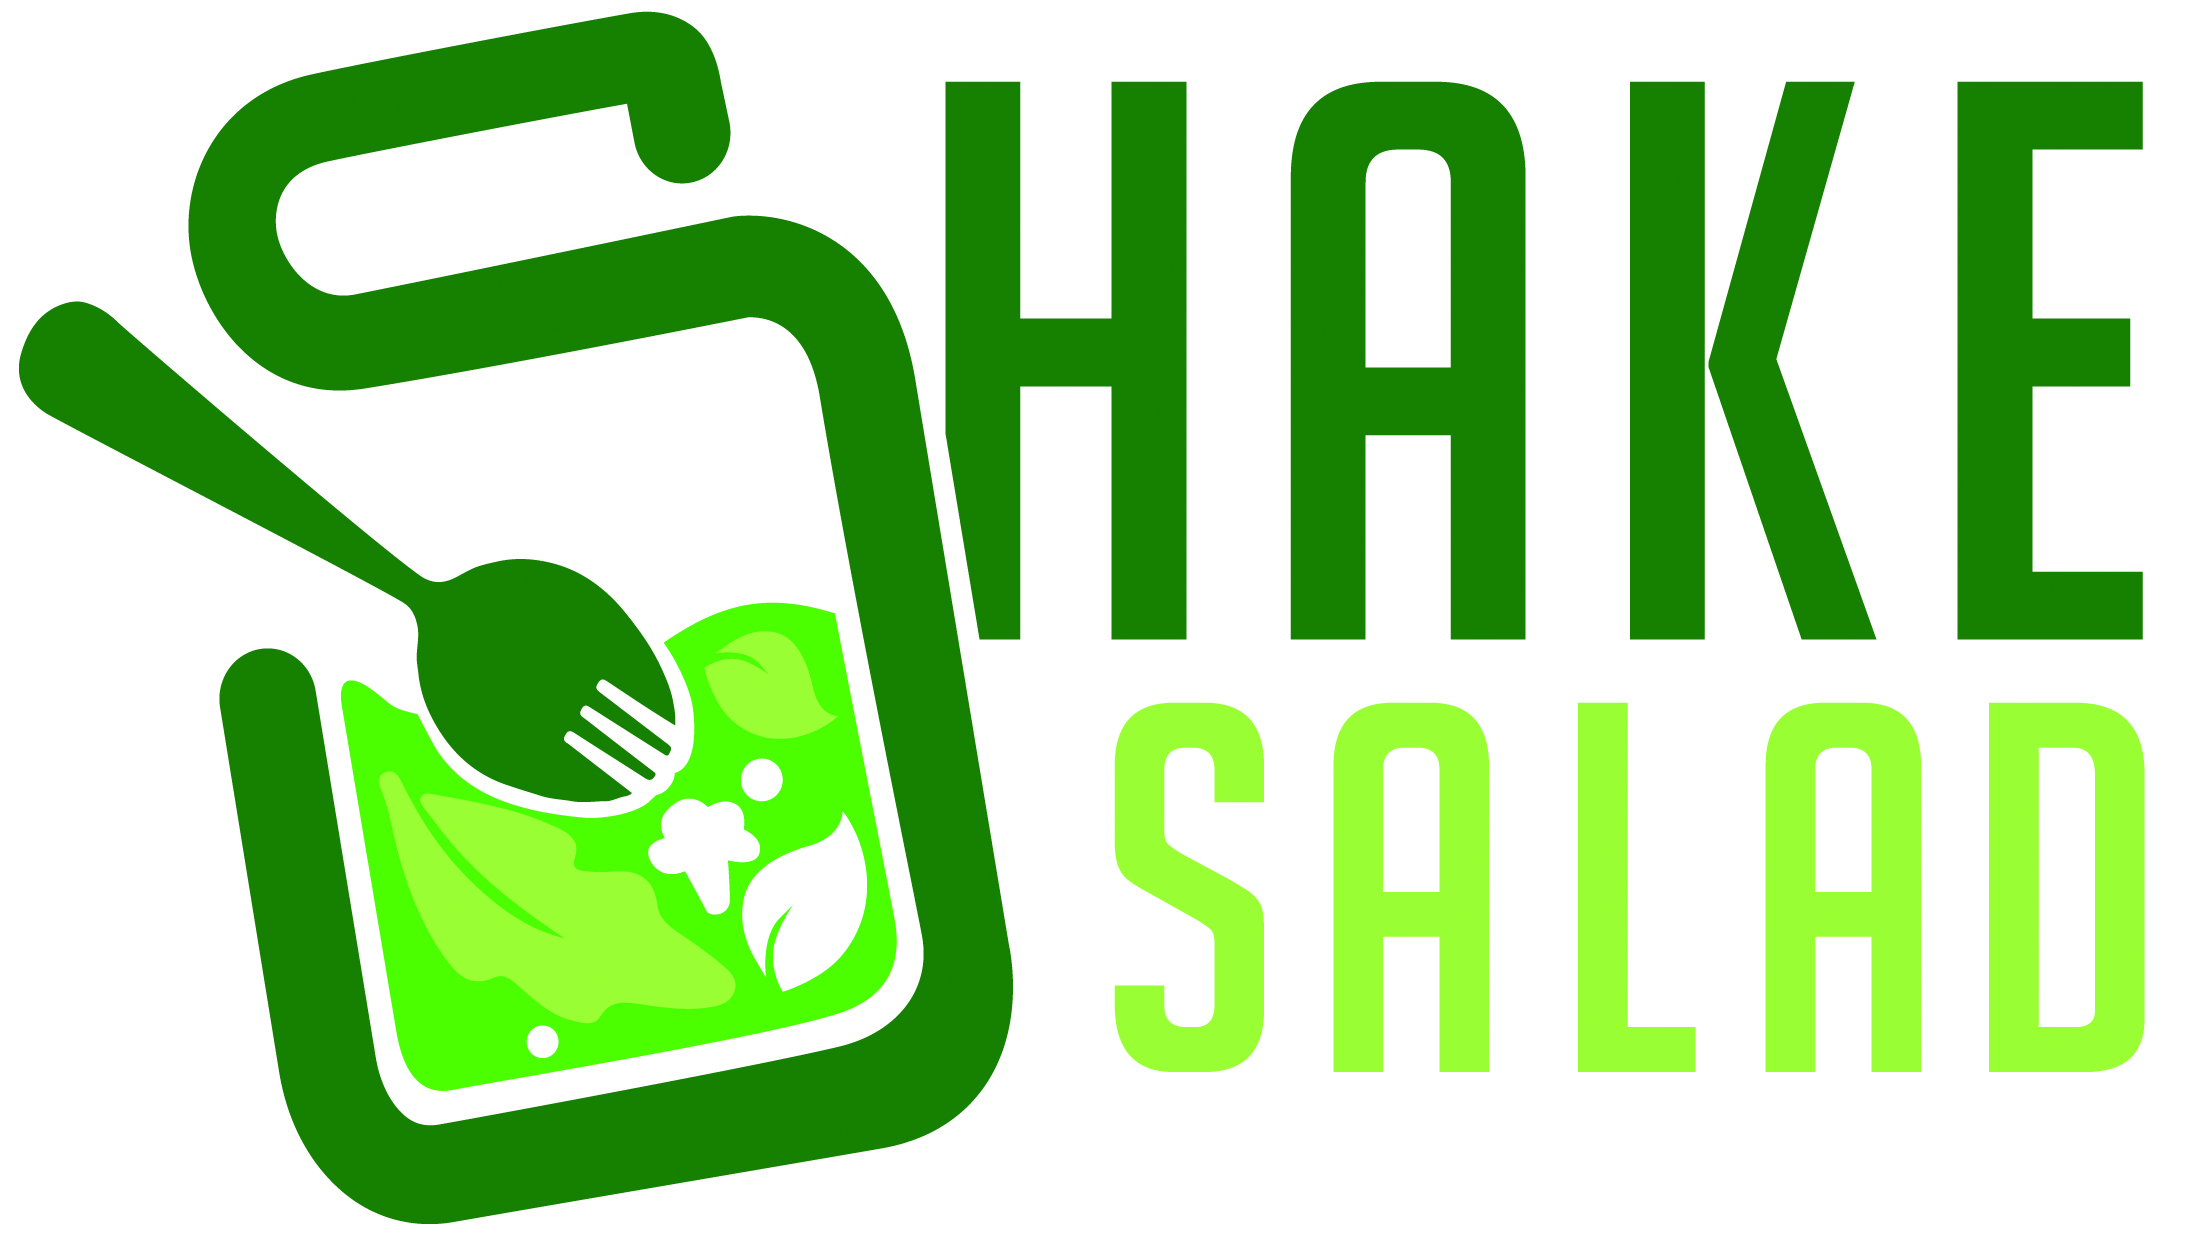 Shake Salad